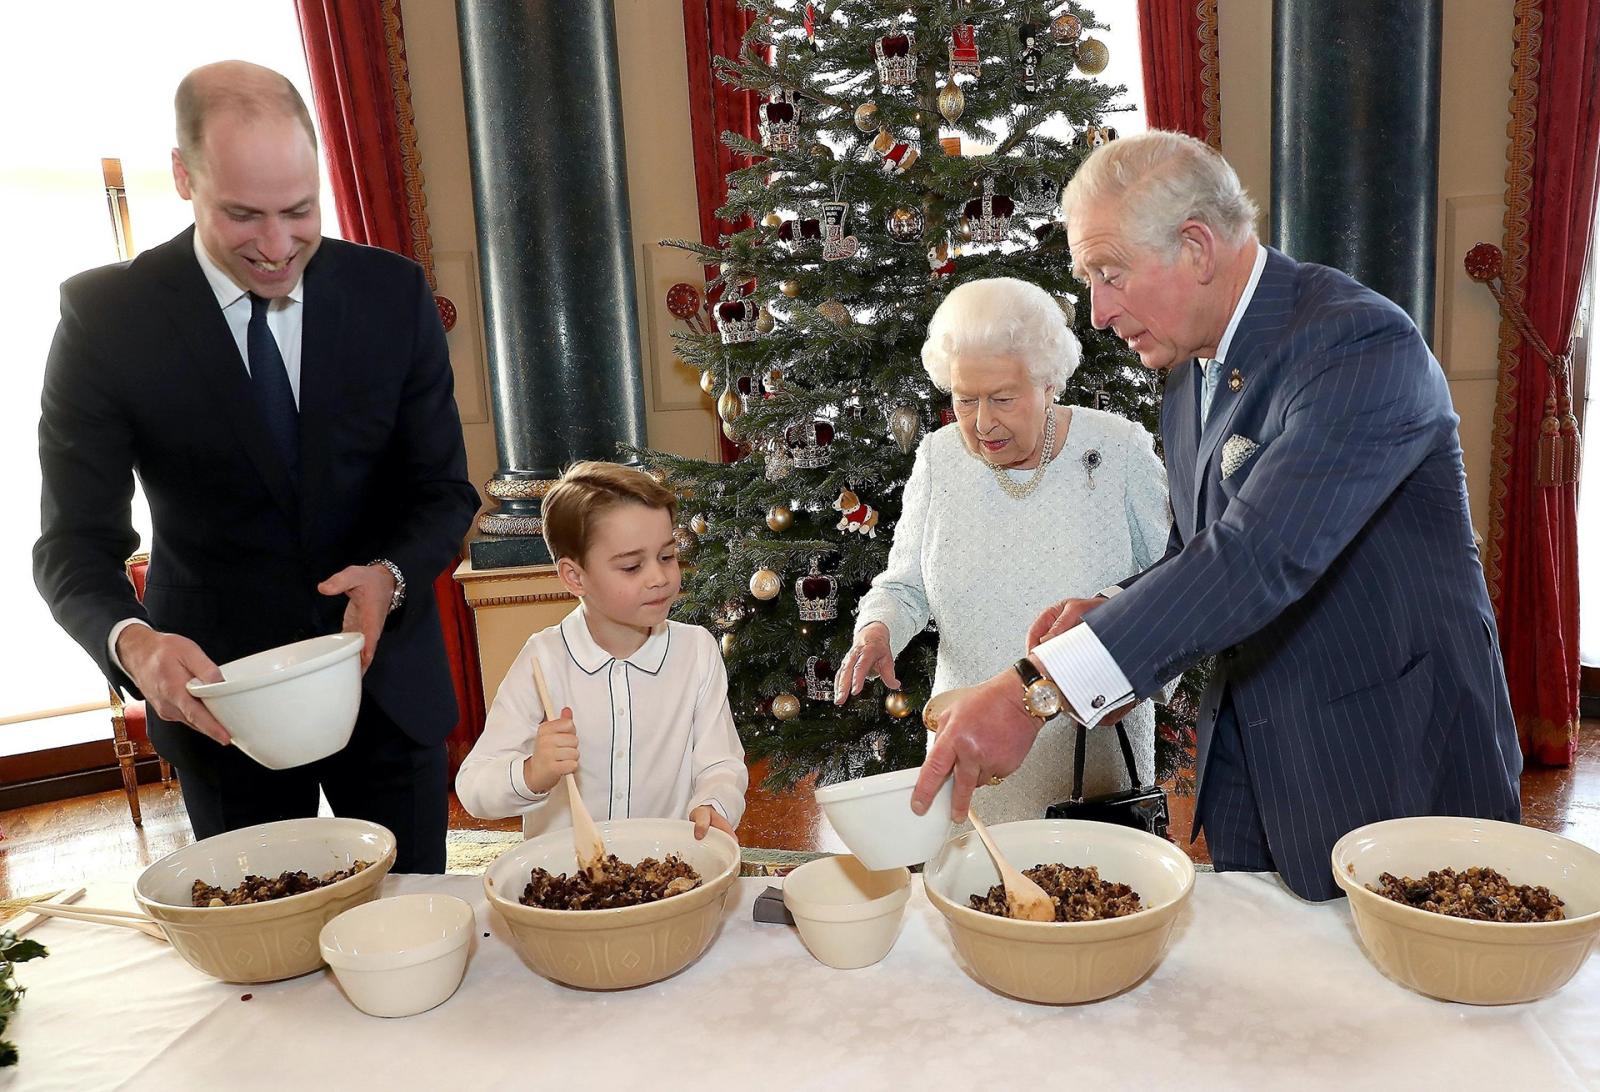 Royal Feast: Inside the British Royal Family's Christmas Menu - image 2